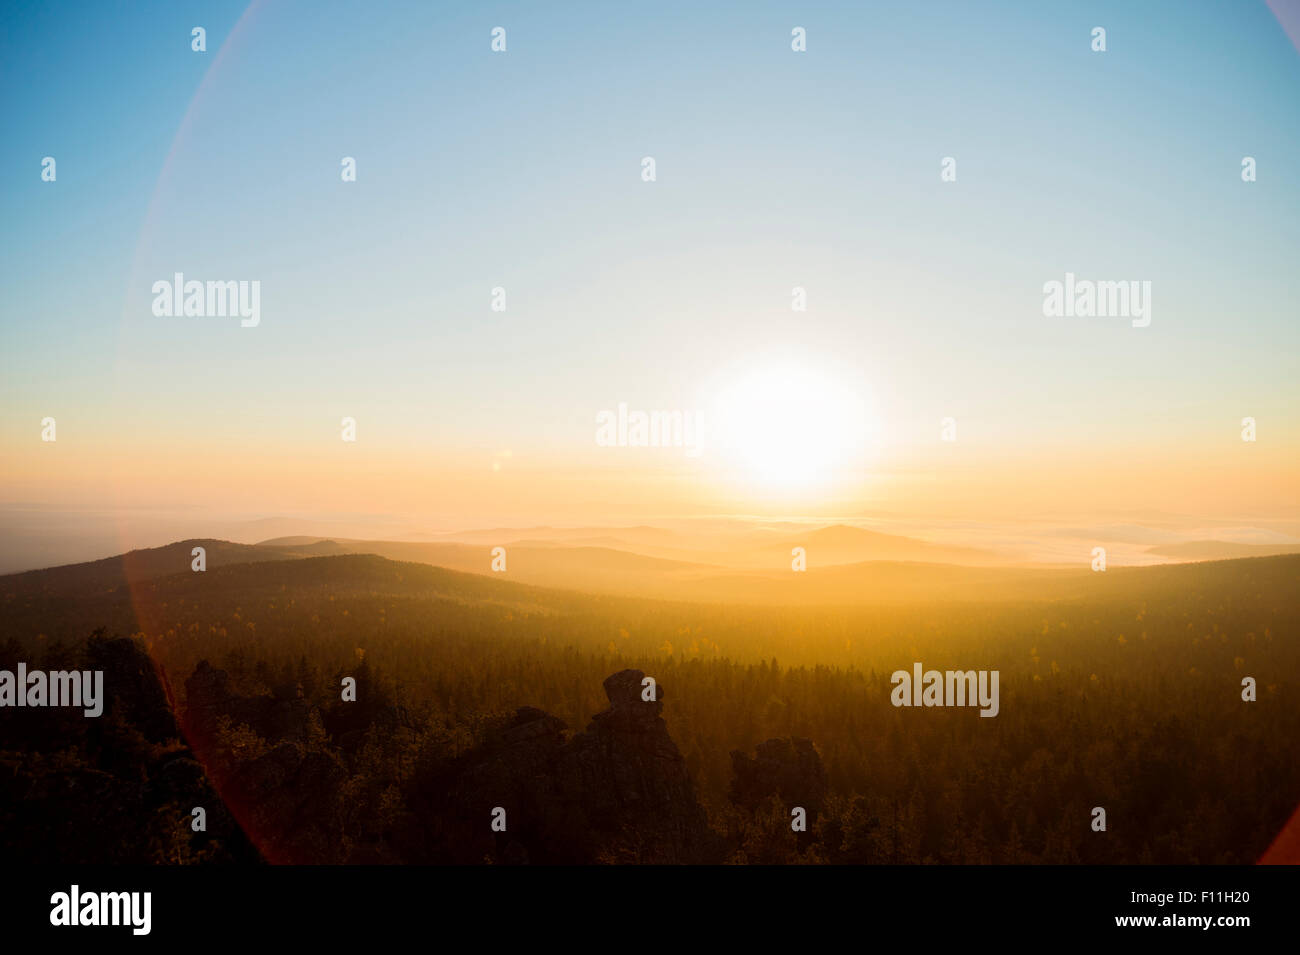 Sunrise over hills in remote landscape Stock Photo